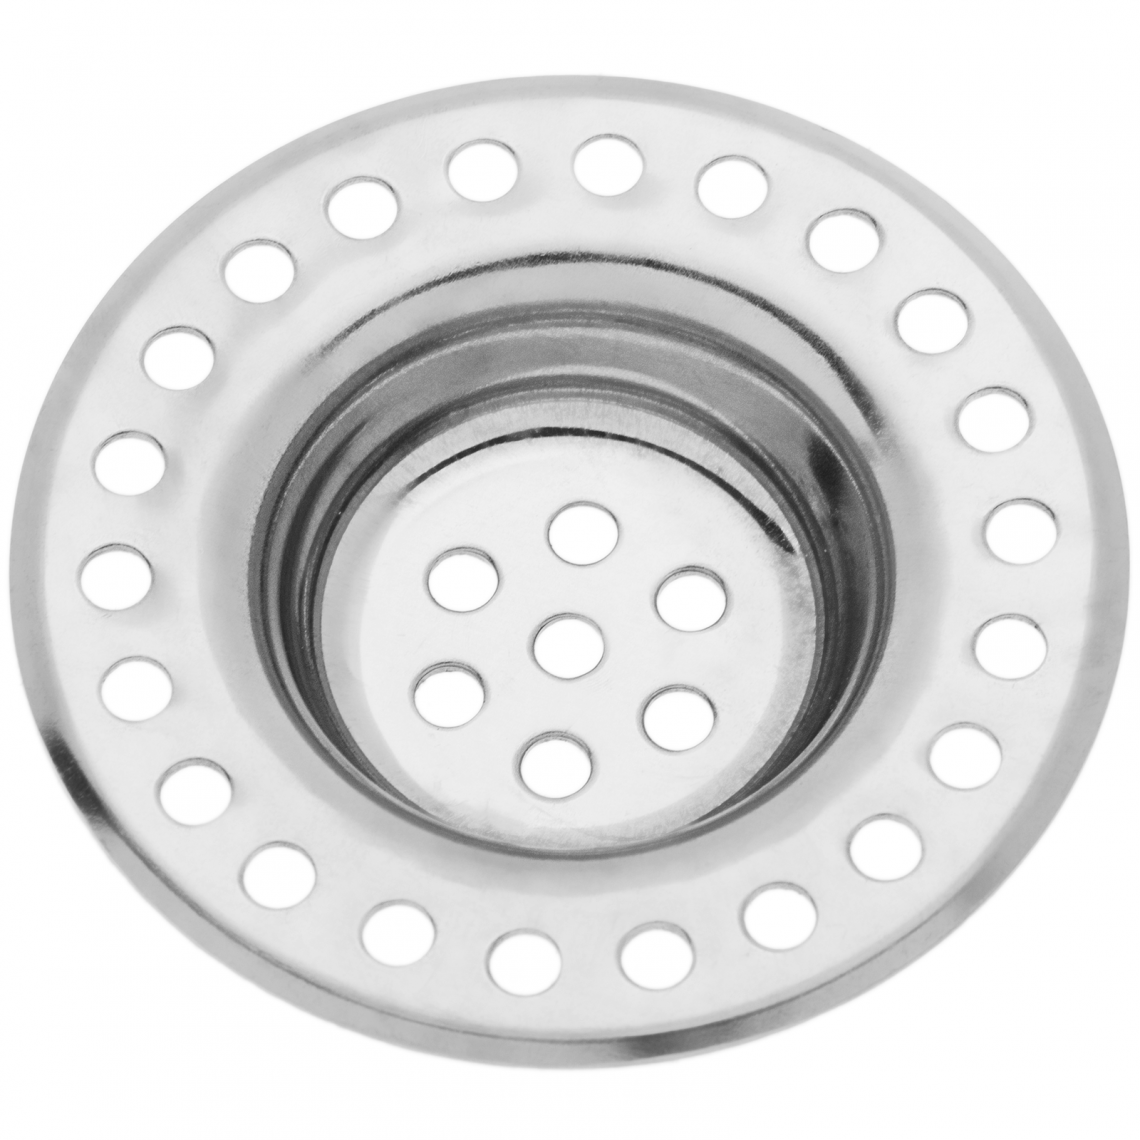 Primematik - Filtre de vidange anti-colmatage 50 x 30 mm - Bonde de lavabo